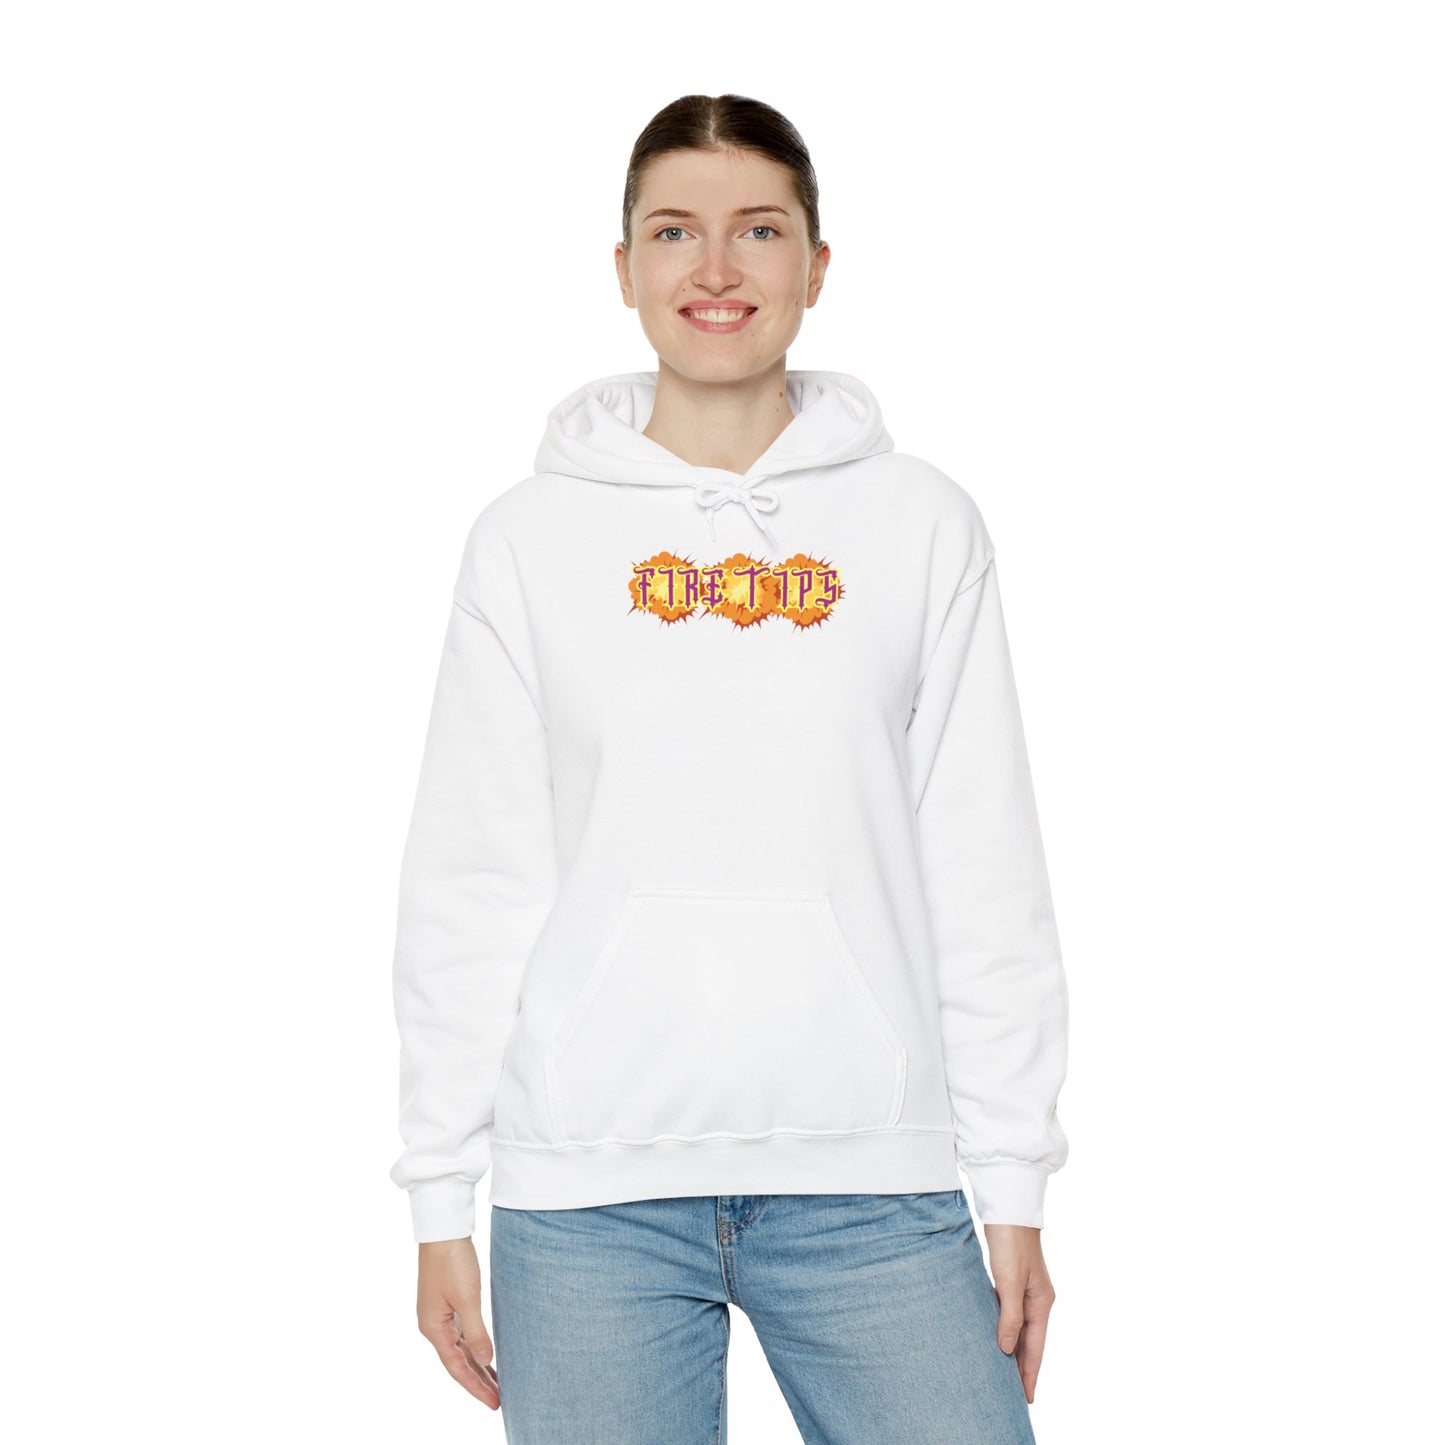 Unisex Heavy Blend™ Hooded Graphic design (Fire Tips) Sweatshirt